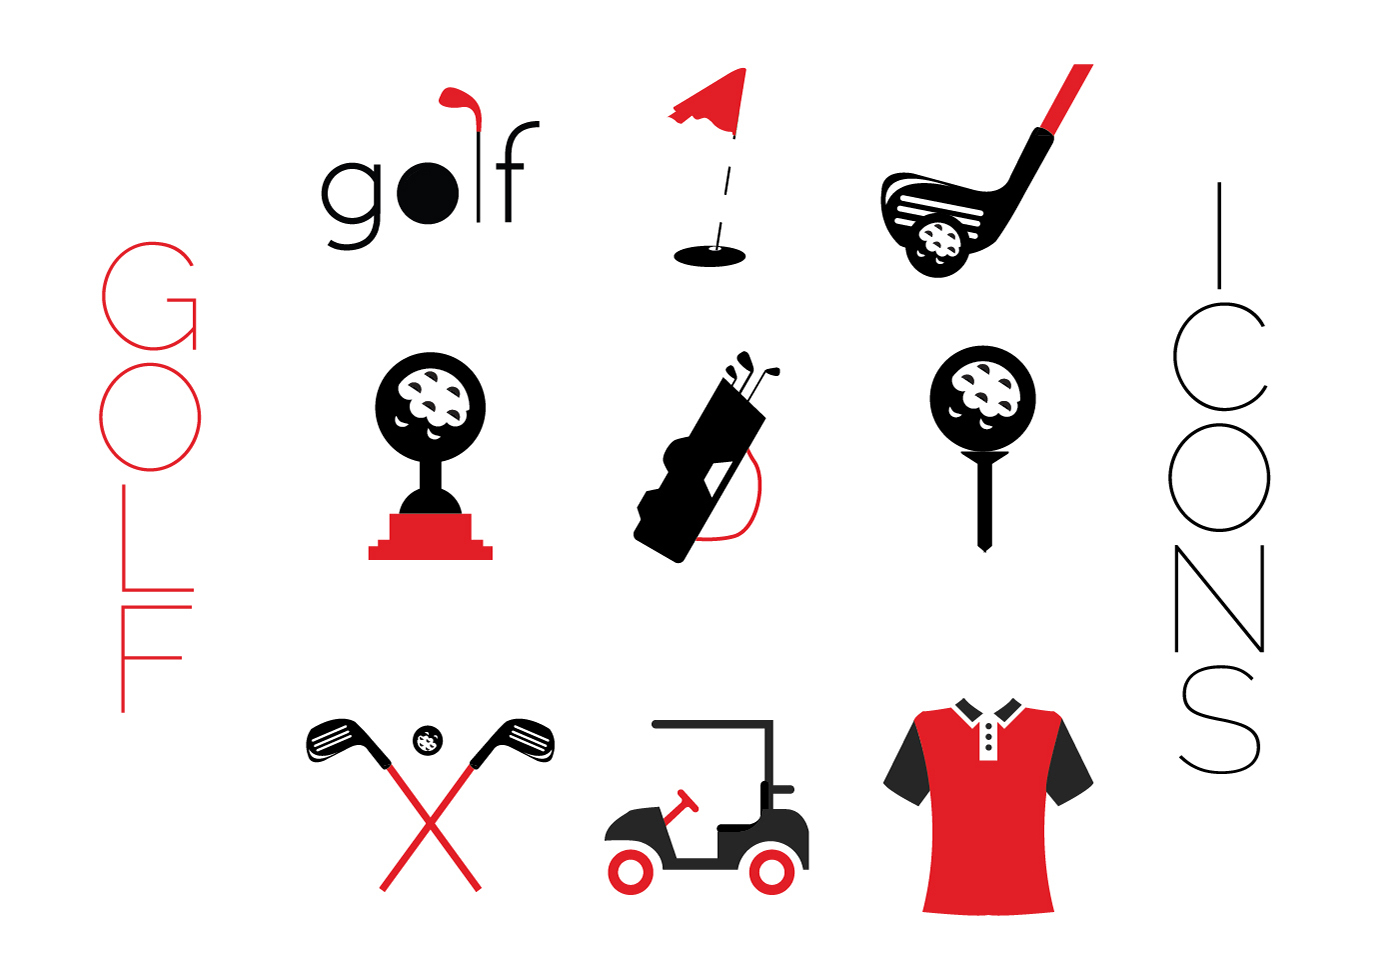 Download Creative Golf icons 102462 - Download Free Vectors, Clipart Graphics & Vector Art